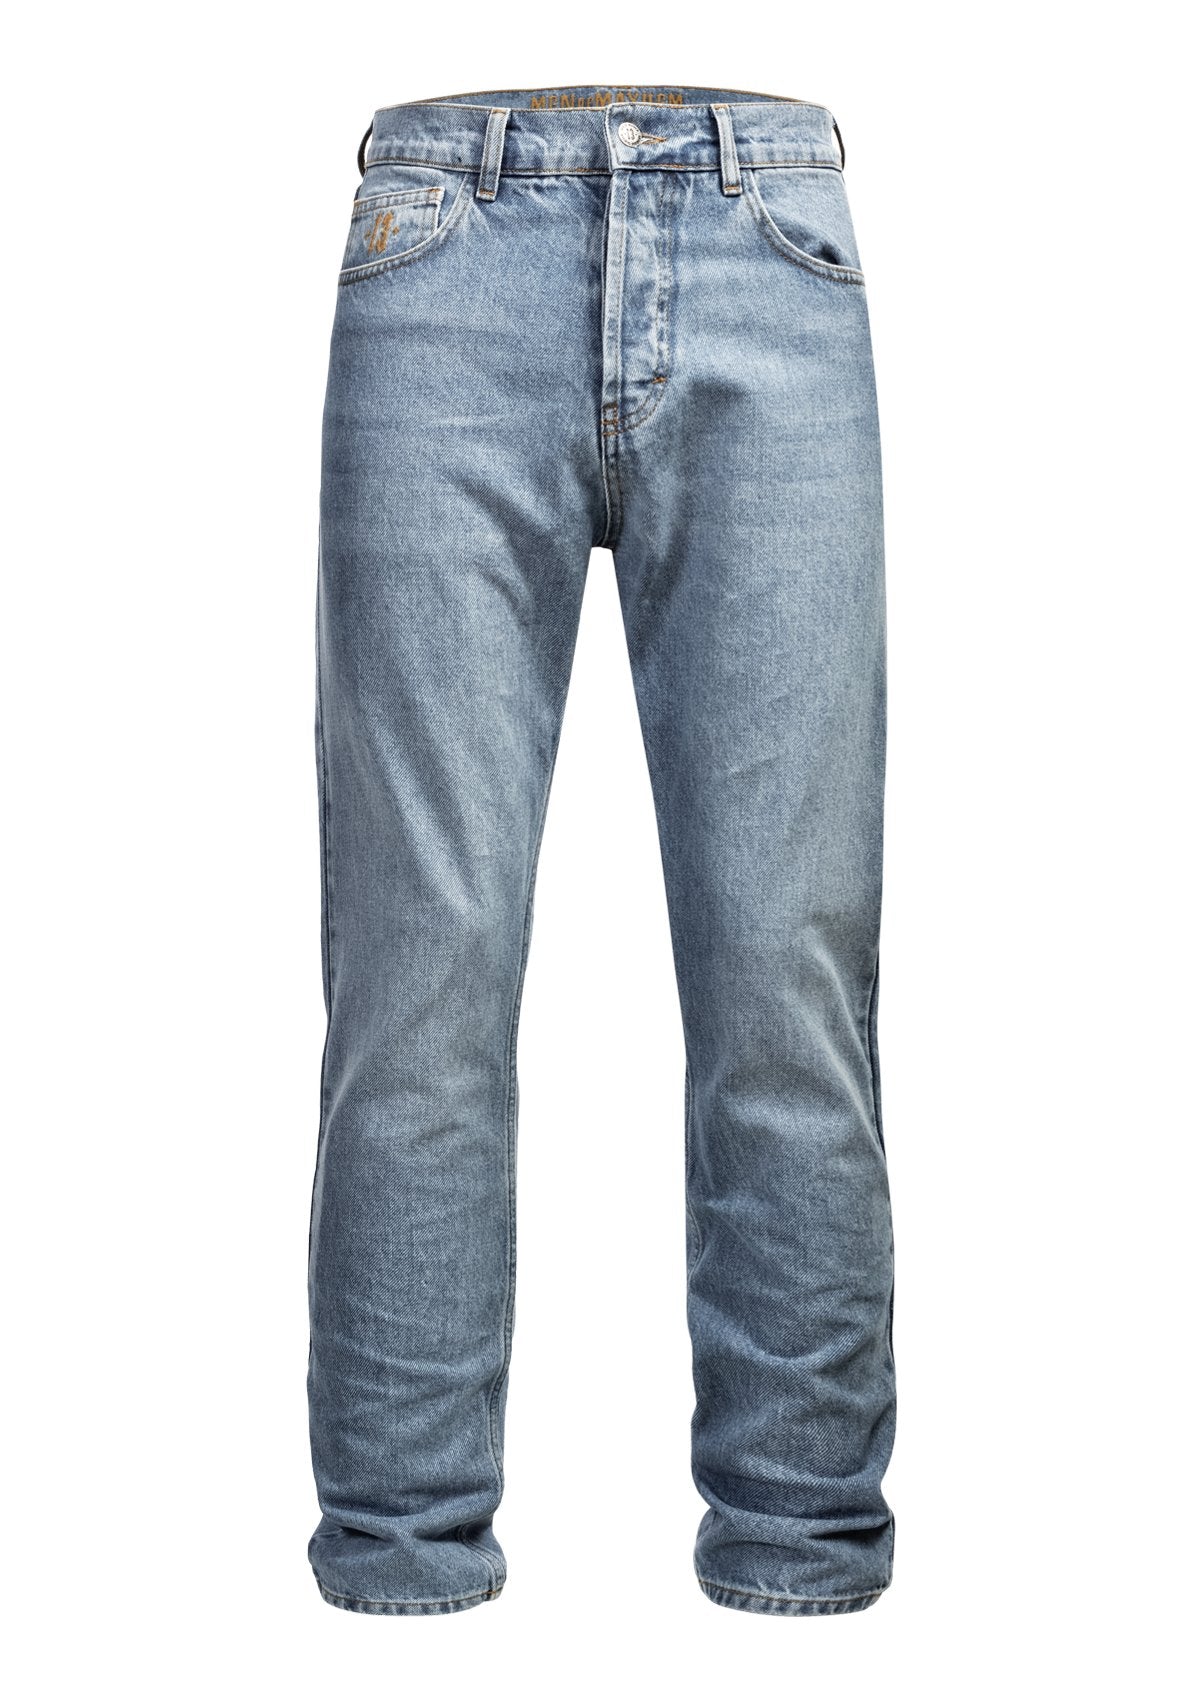 Jeans M13.1 Classic Regular BLW - MEN OF MAYHEM - ALAIKO-EXCHANGES-MM-M-1120-JH-BLW - Blau - blue